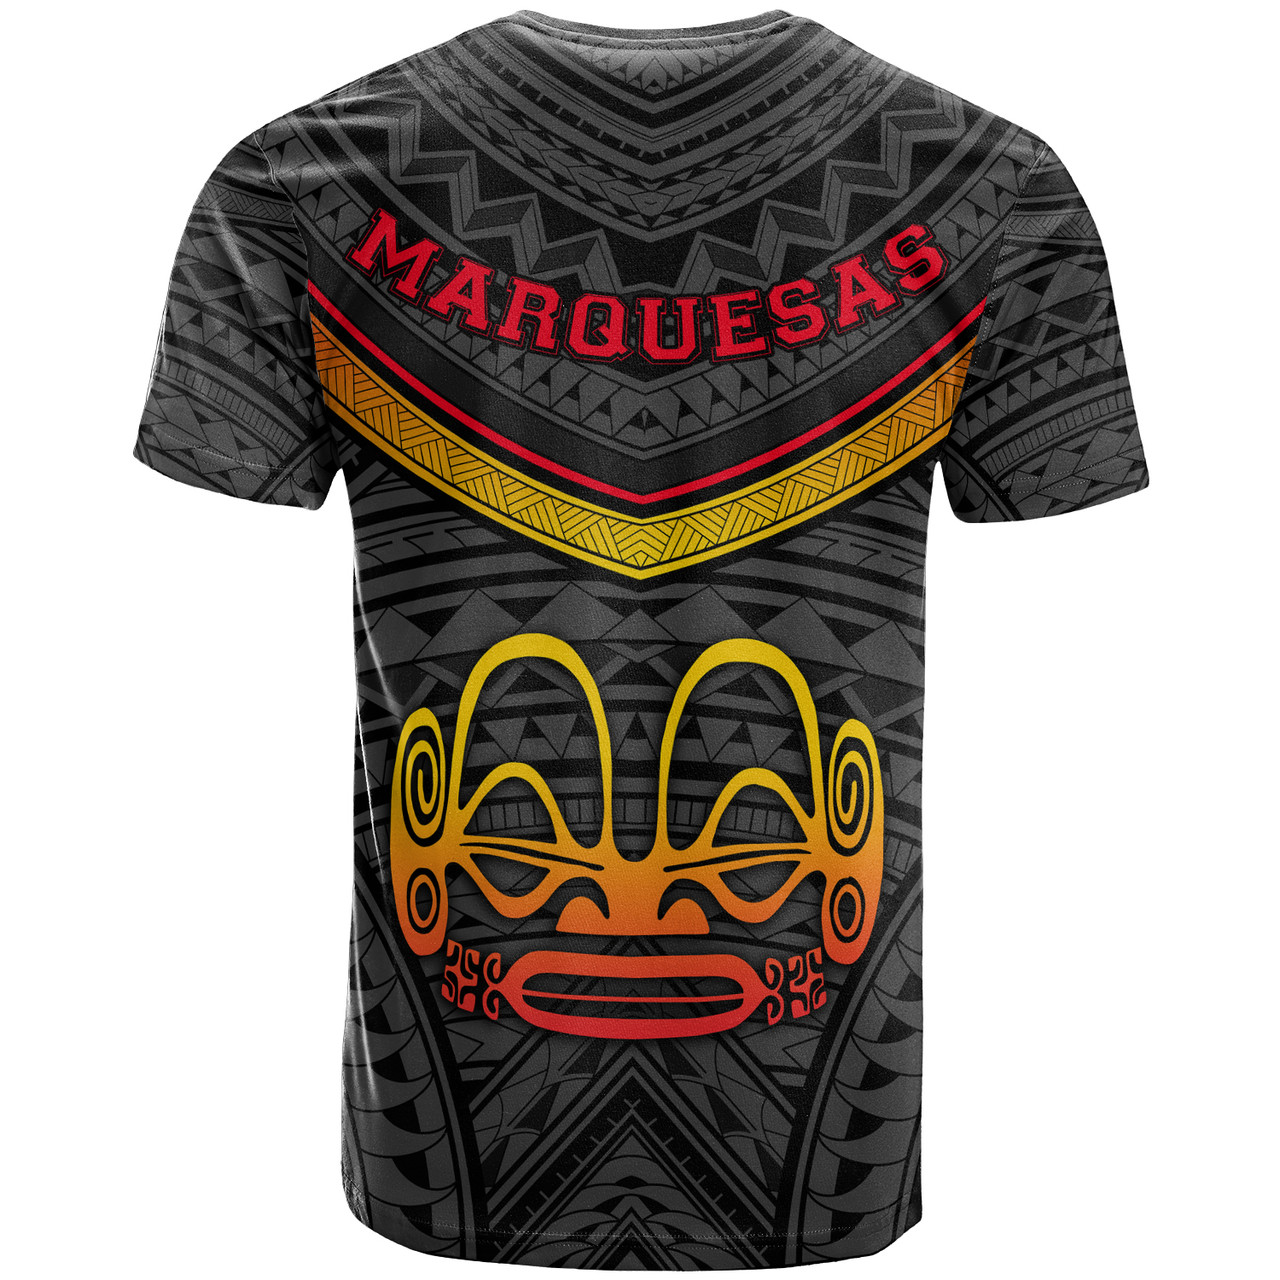 Marquesas Islands T-Shirt Polynesian Authen